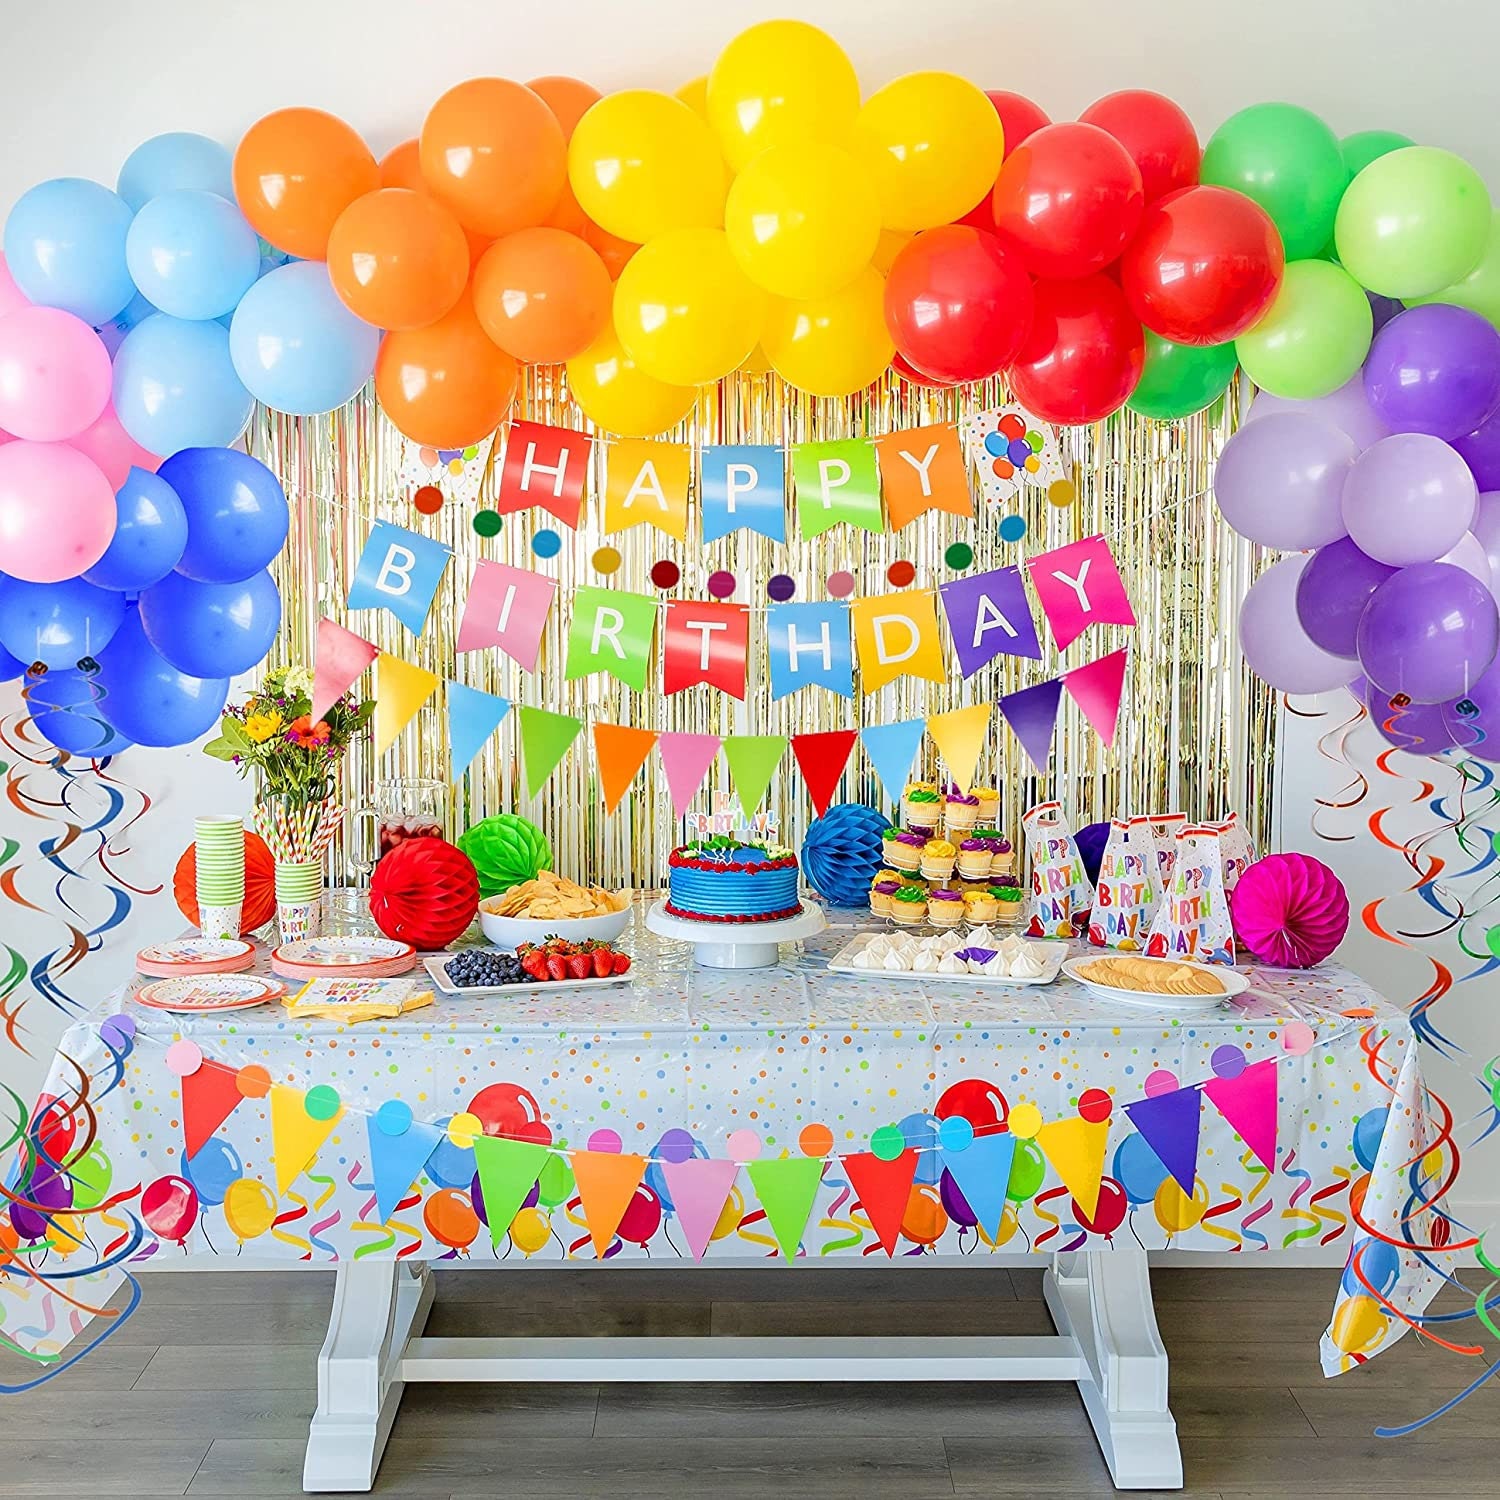 Anwyll Rainbow Birthday Party Decorations Kit for Kids Children Girls  Boys,Colorful Birthday Party Decorations Set,Happy Birthday Decor